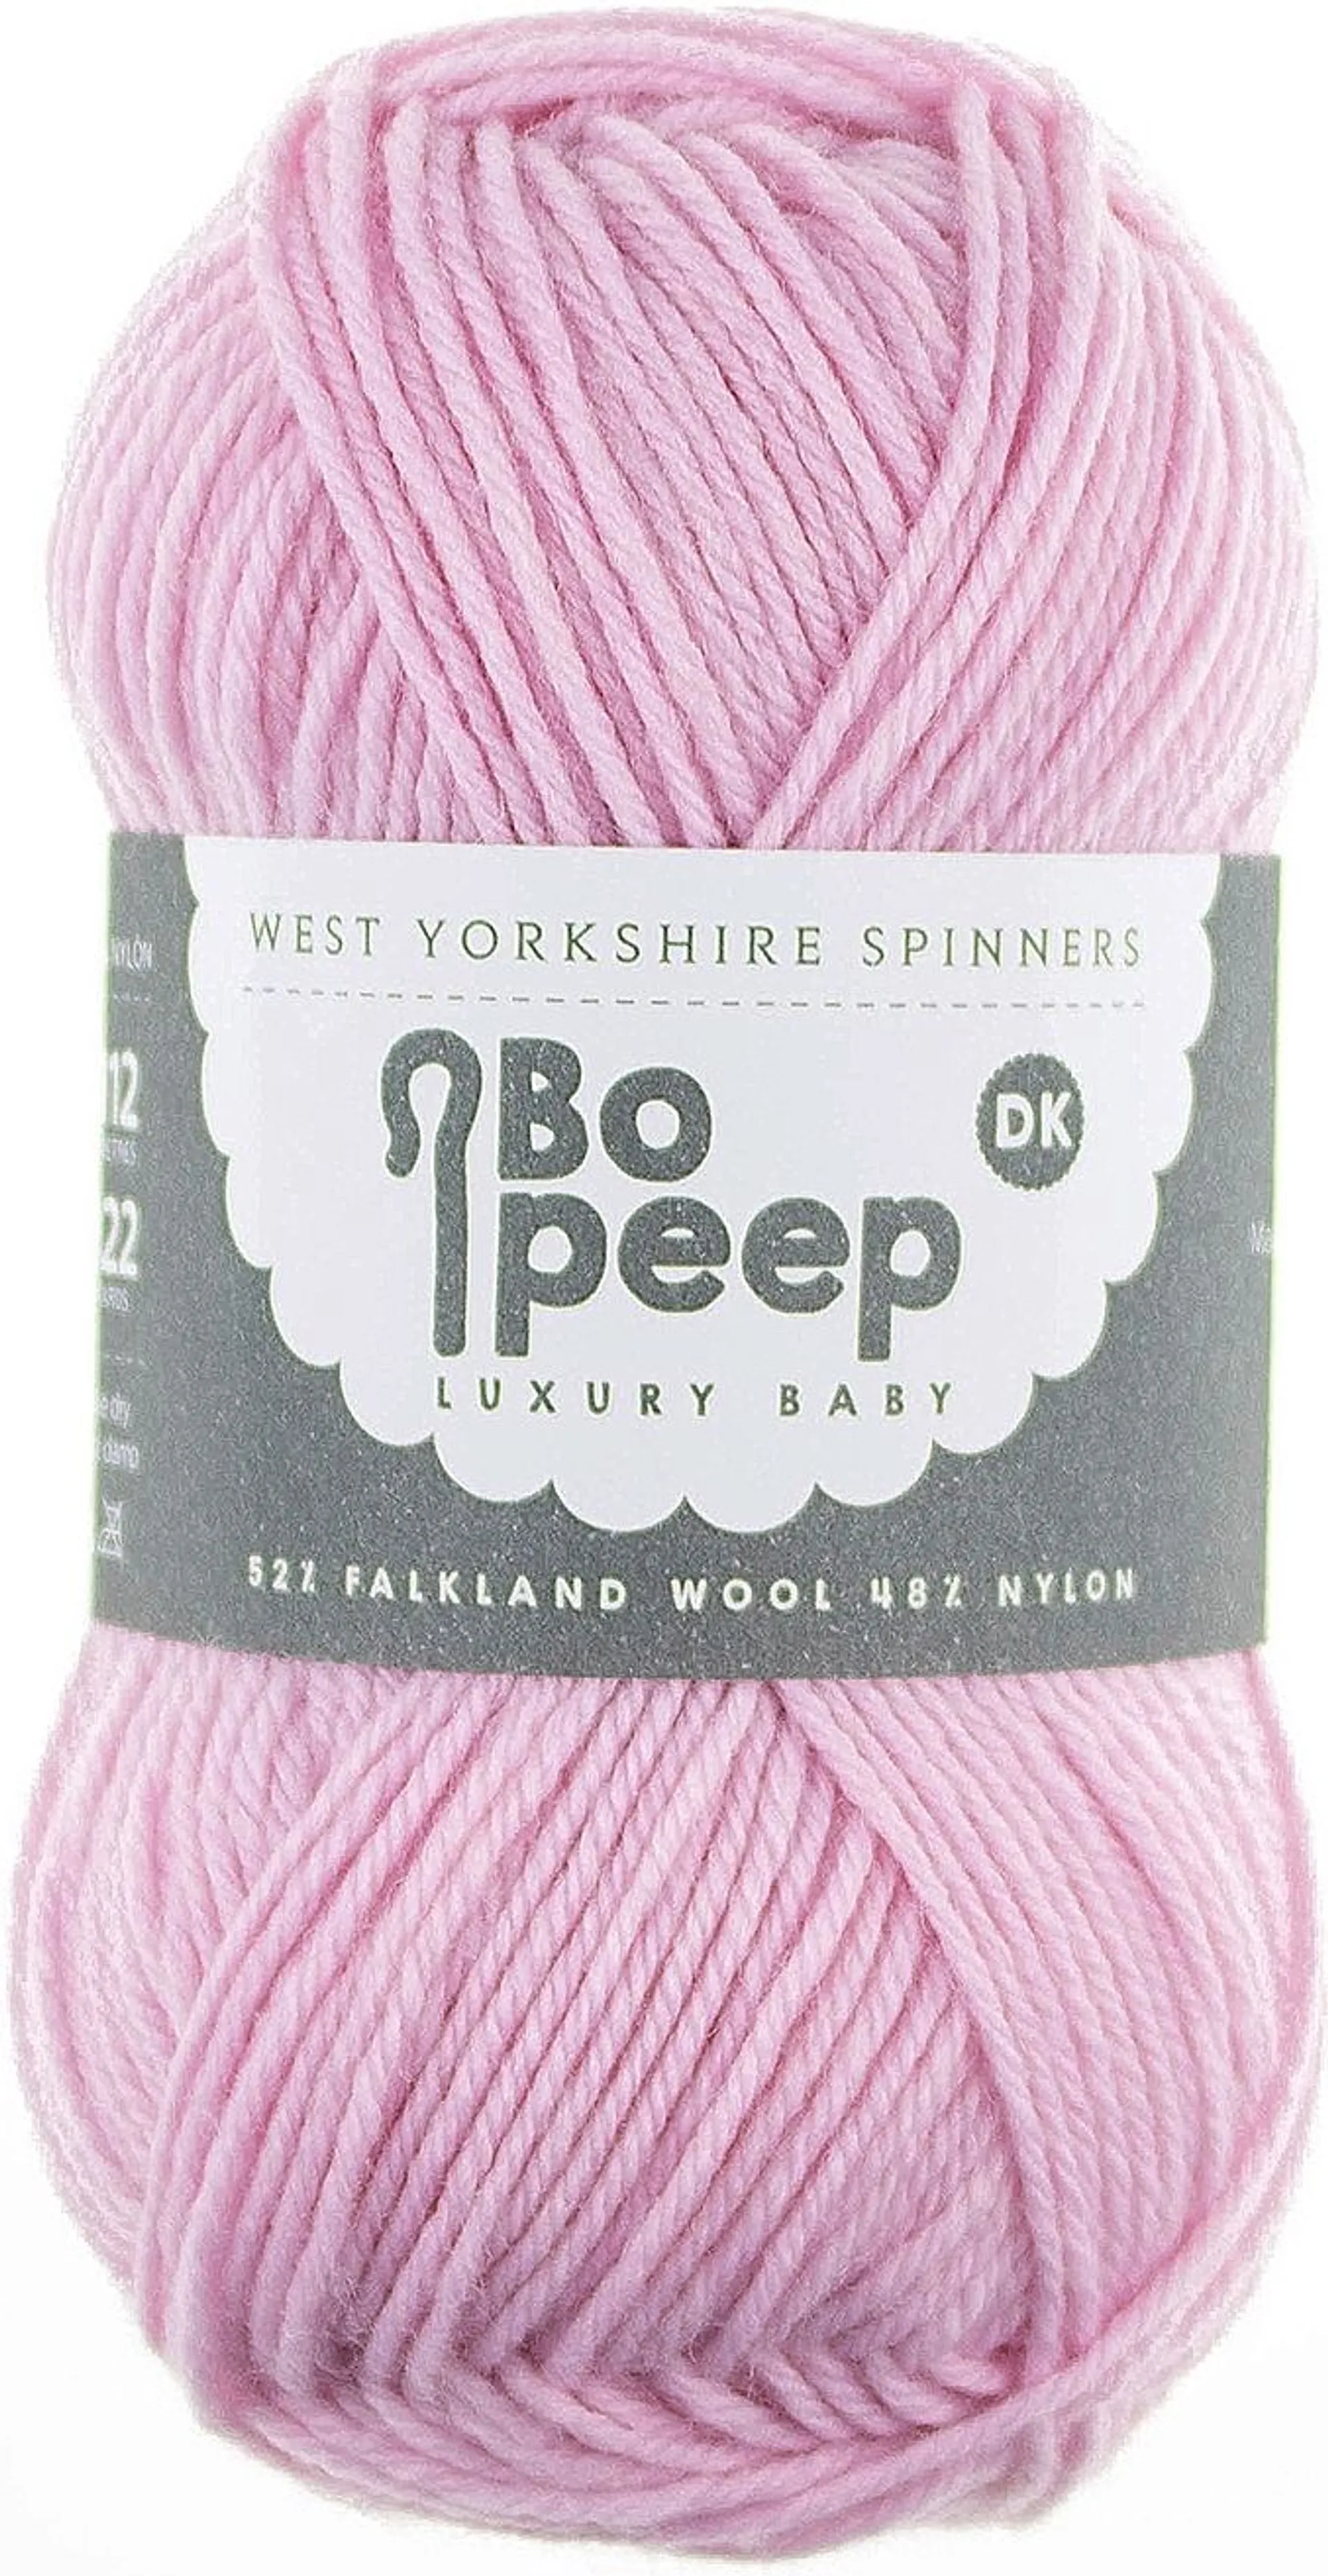 West Yorkshire Spinners lanka Bo Peep Luxury Baby DK 50g possu 269